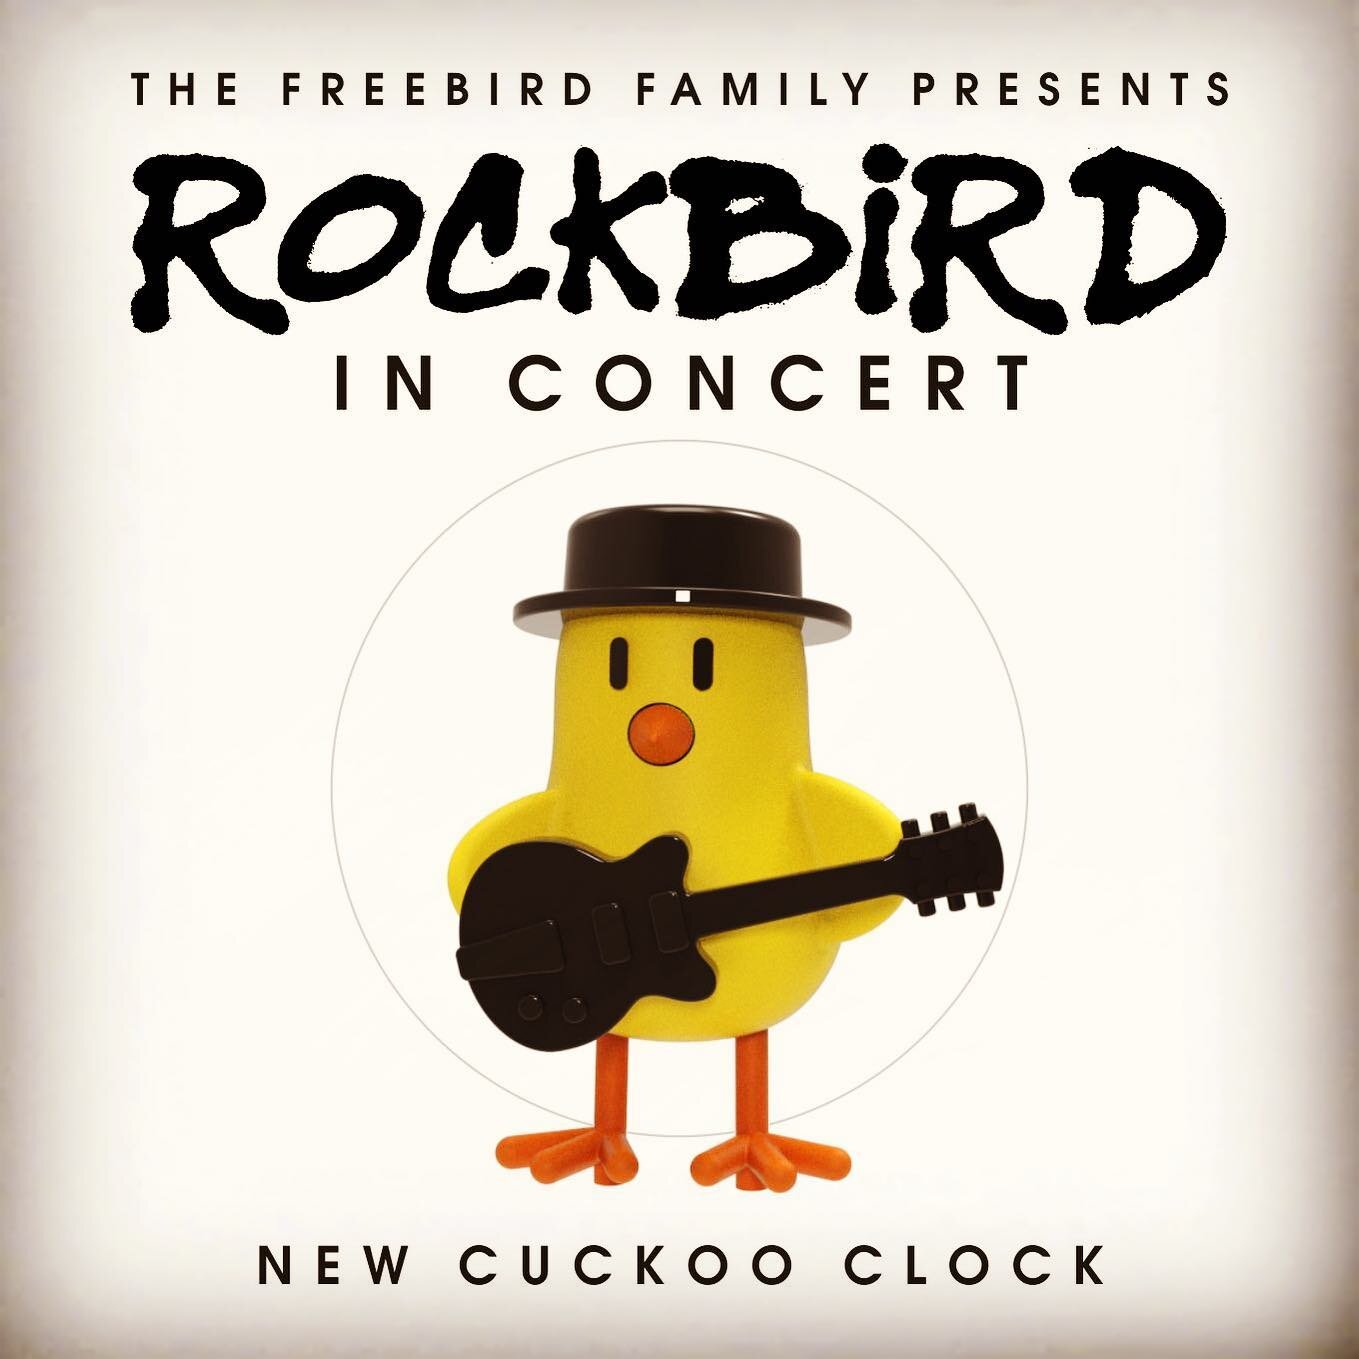 Rockbird - cuckoo clock coming soon! Design by @gerardomari for @progetti.life . Rockbird is the new member of the Freebird family.
.
#rockbird #cuckoo #clock #rock #accessories #homeaccessories #fun #fundesign #freebird #freebirdclock  #progettilife